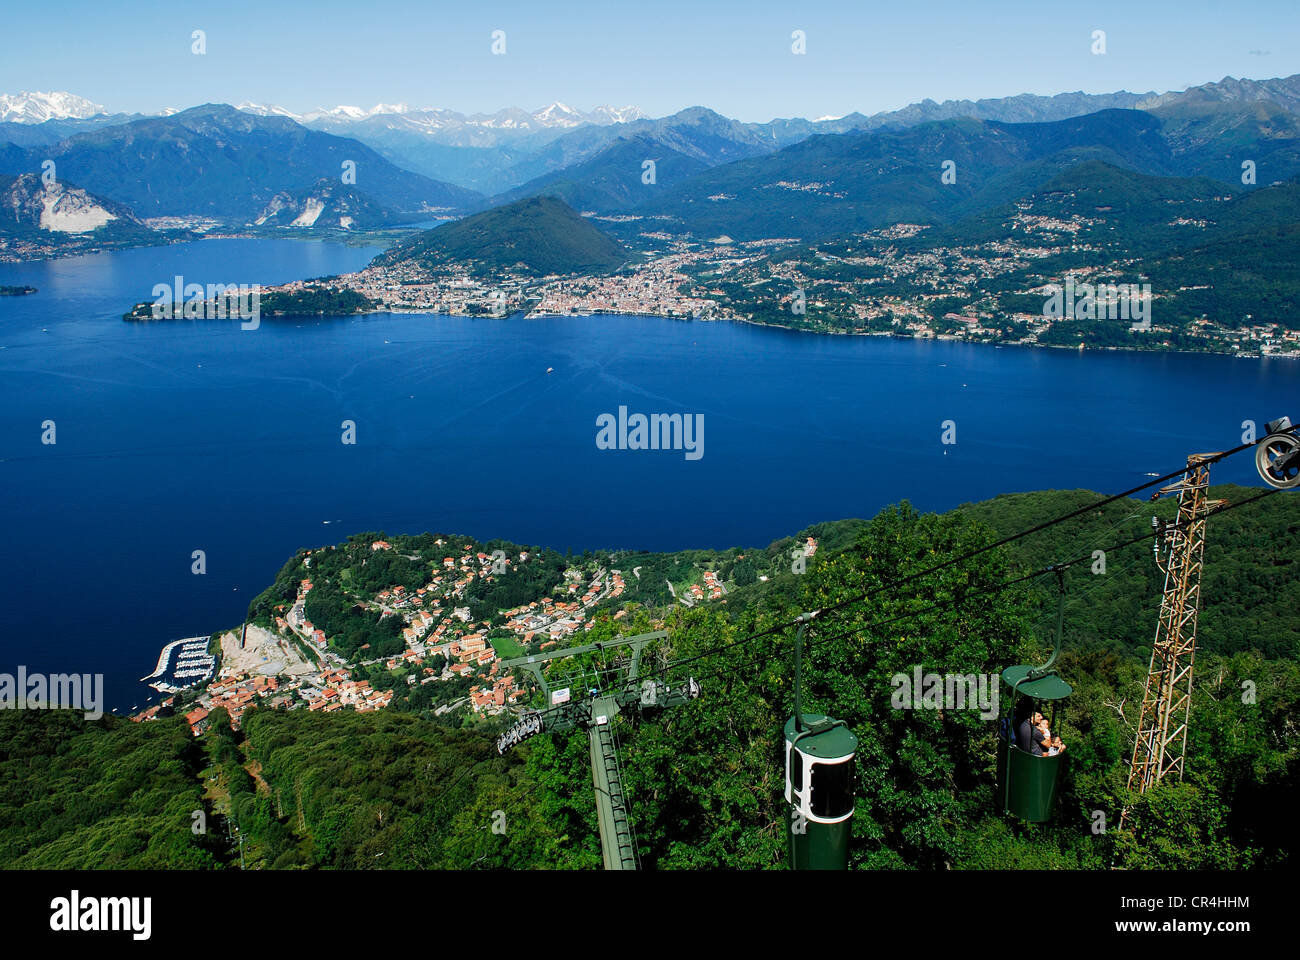 Italy, Lombardy, Lake Maggiore, Laveno Mombello, the village and the lake seen from the cable car of Sasso del Ferro Mountain Stock Photo